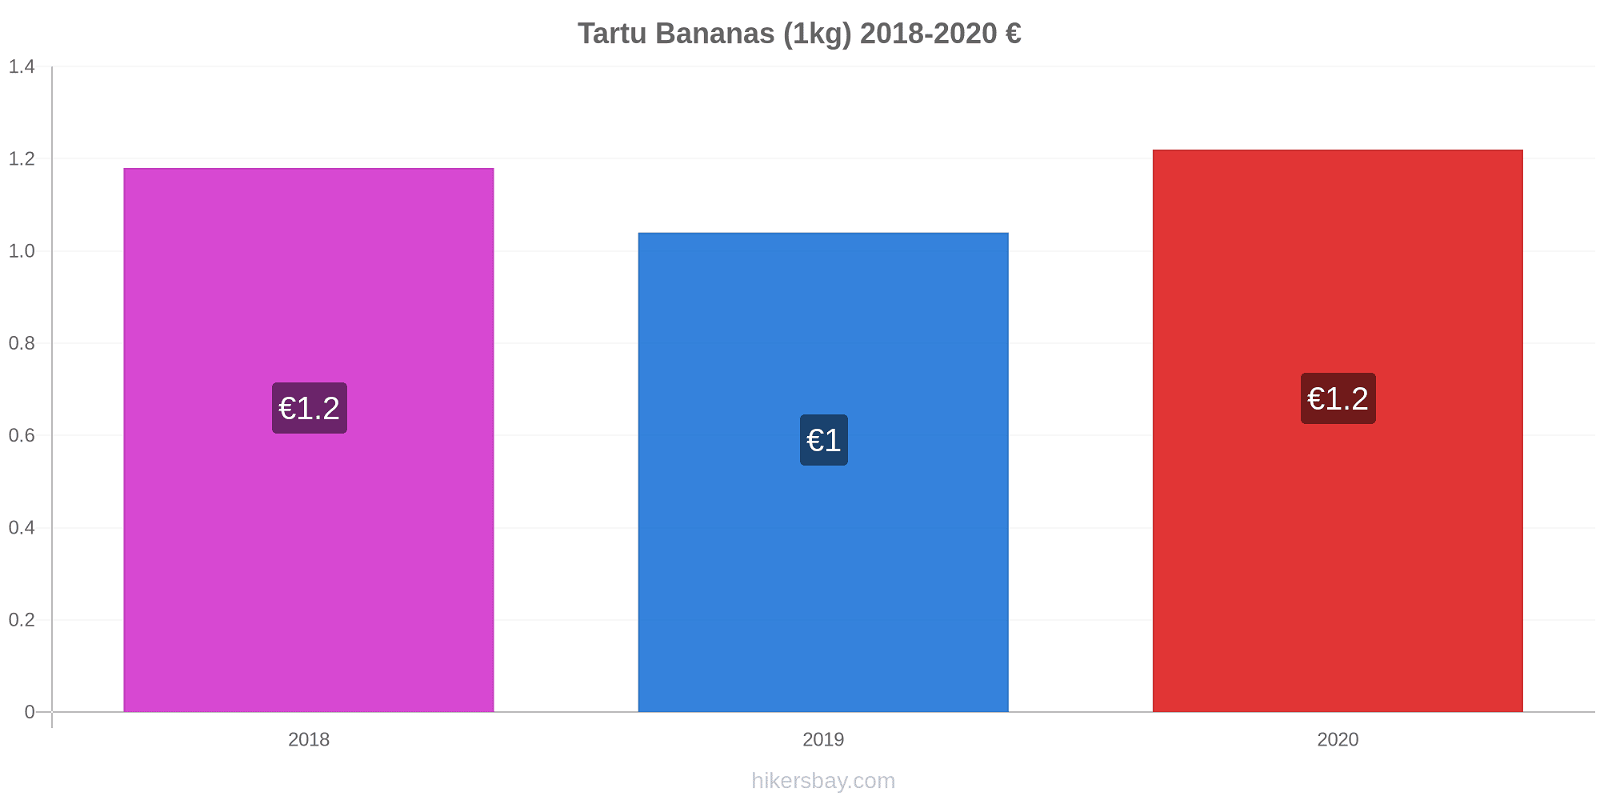 Tartu price changes Bananas (1kg) hikersbay.com